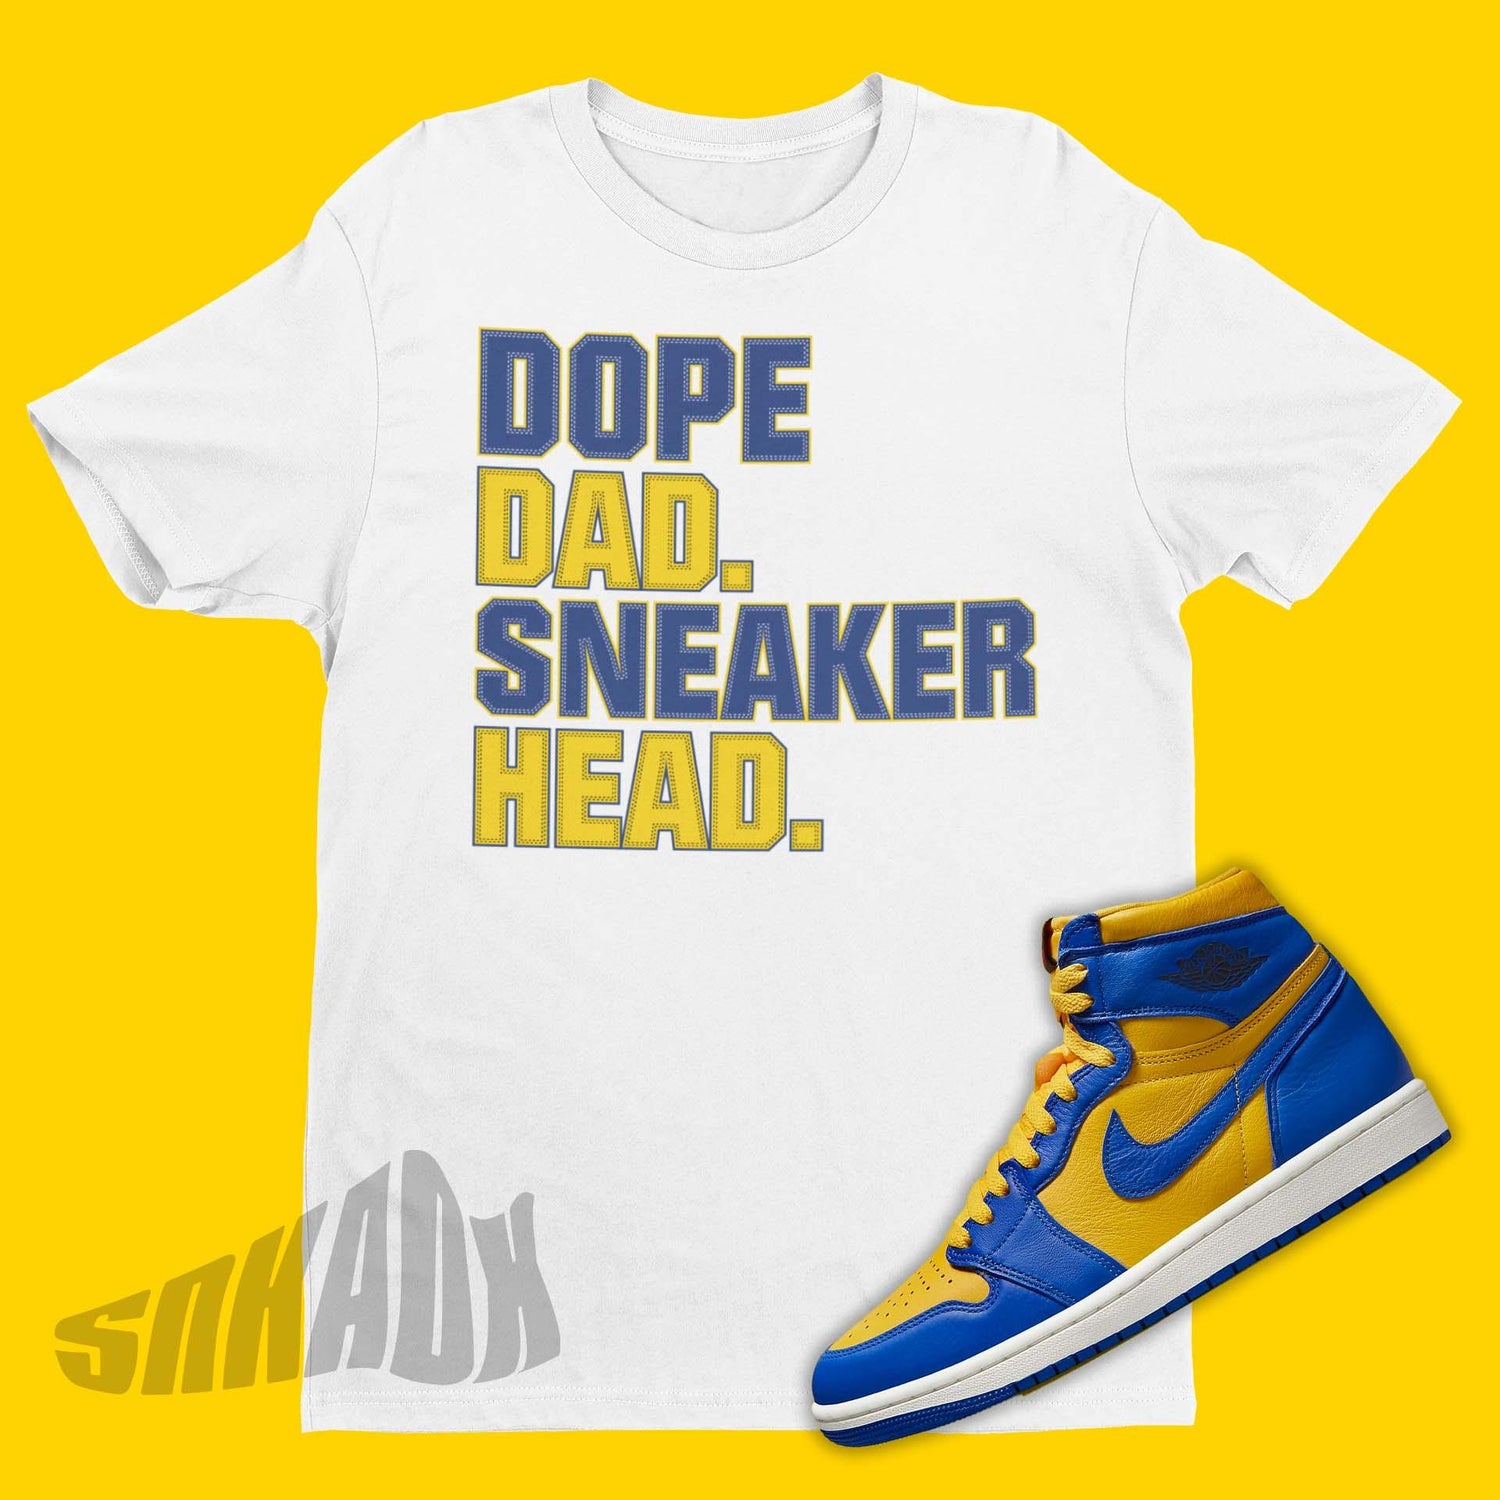 Dope Dad Sneaker Head Air Jordan 1 Reverse Laney Sneaker Matching Tee Shirt